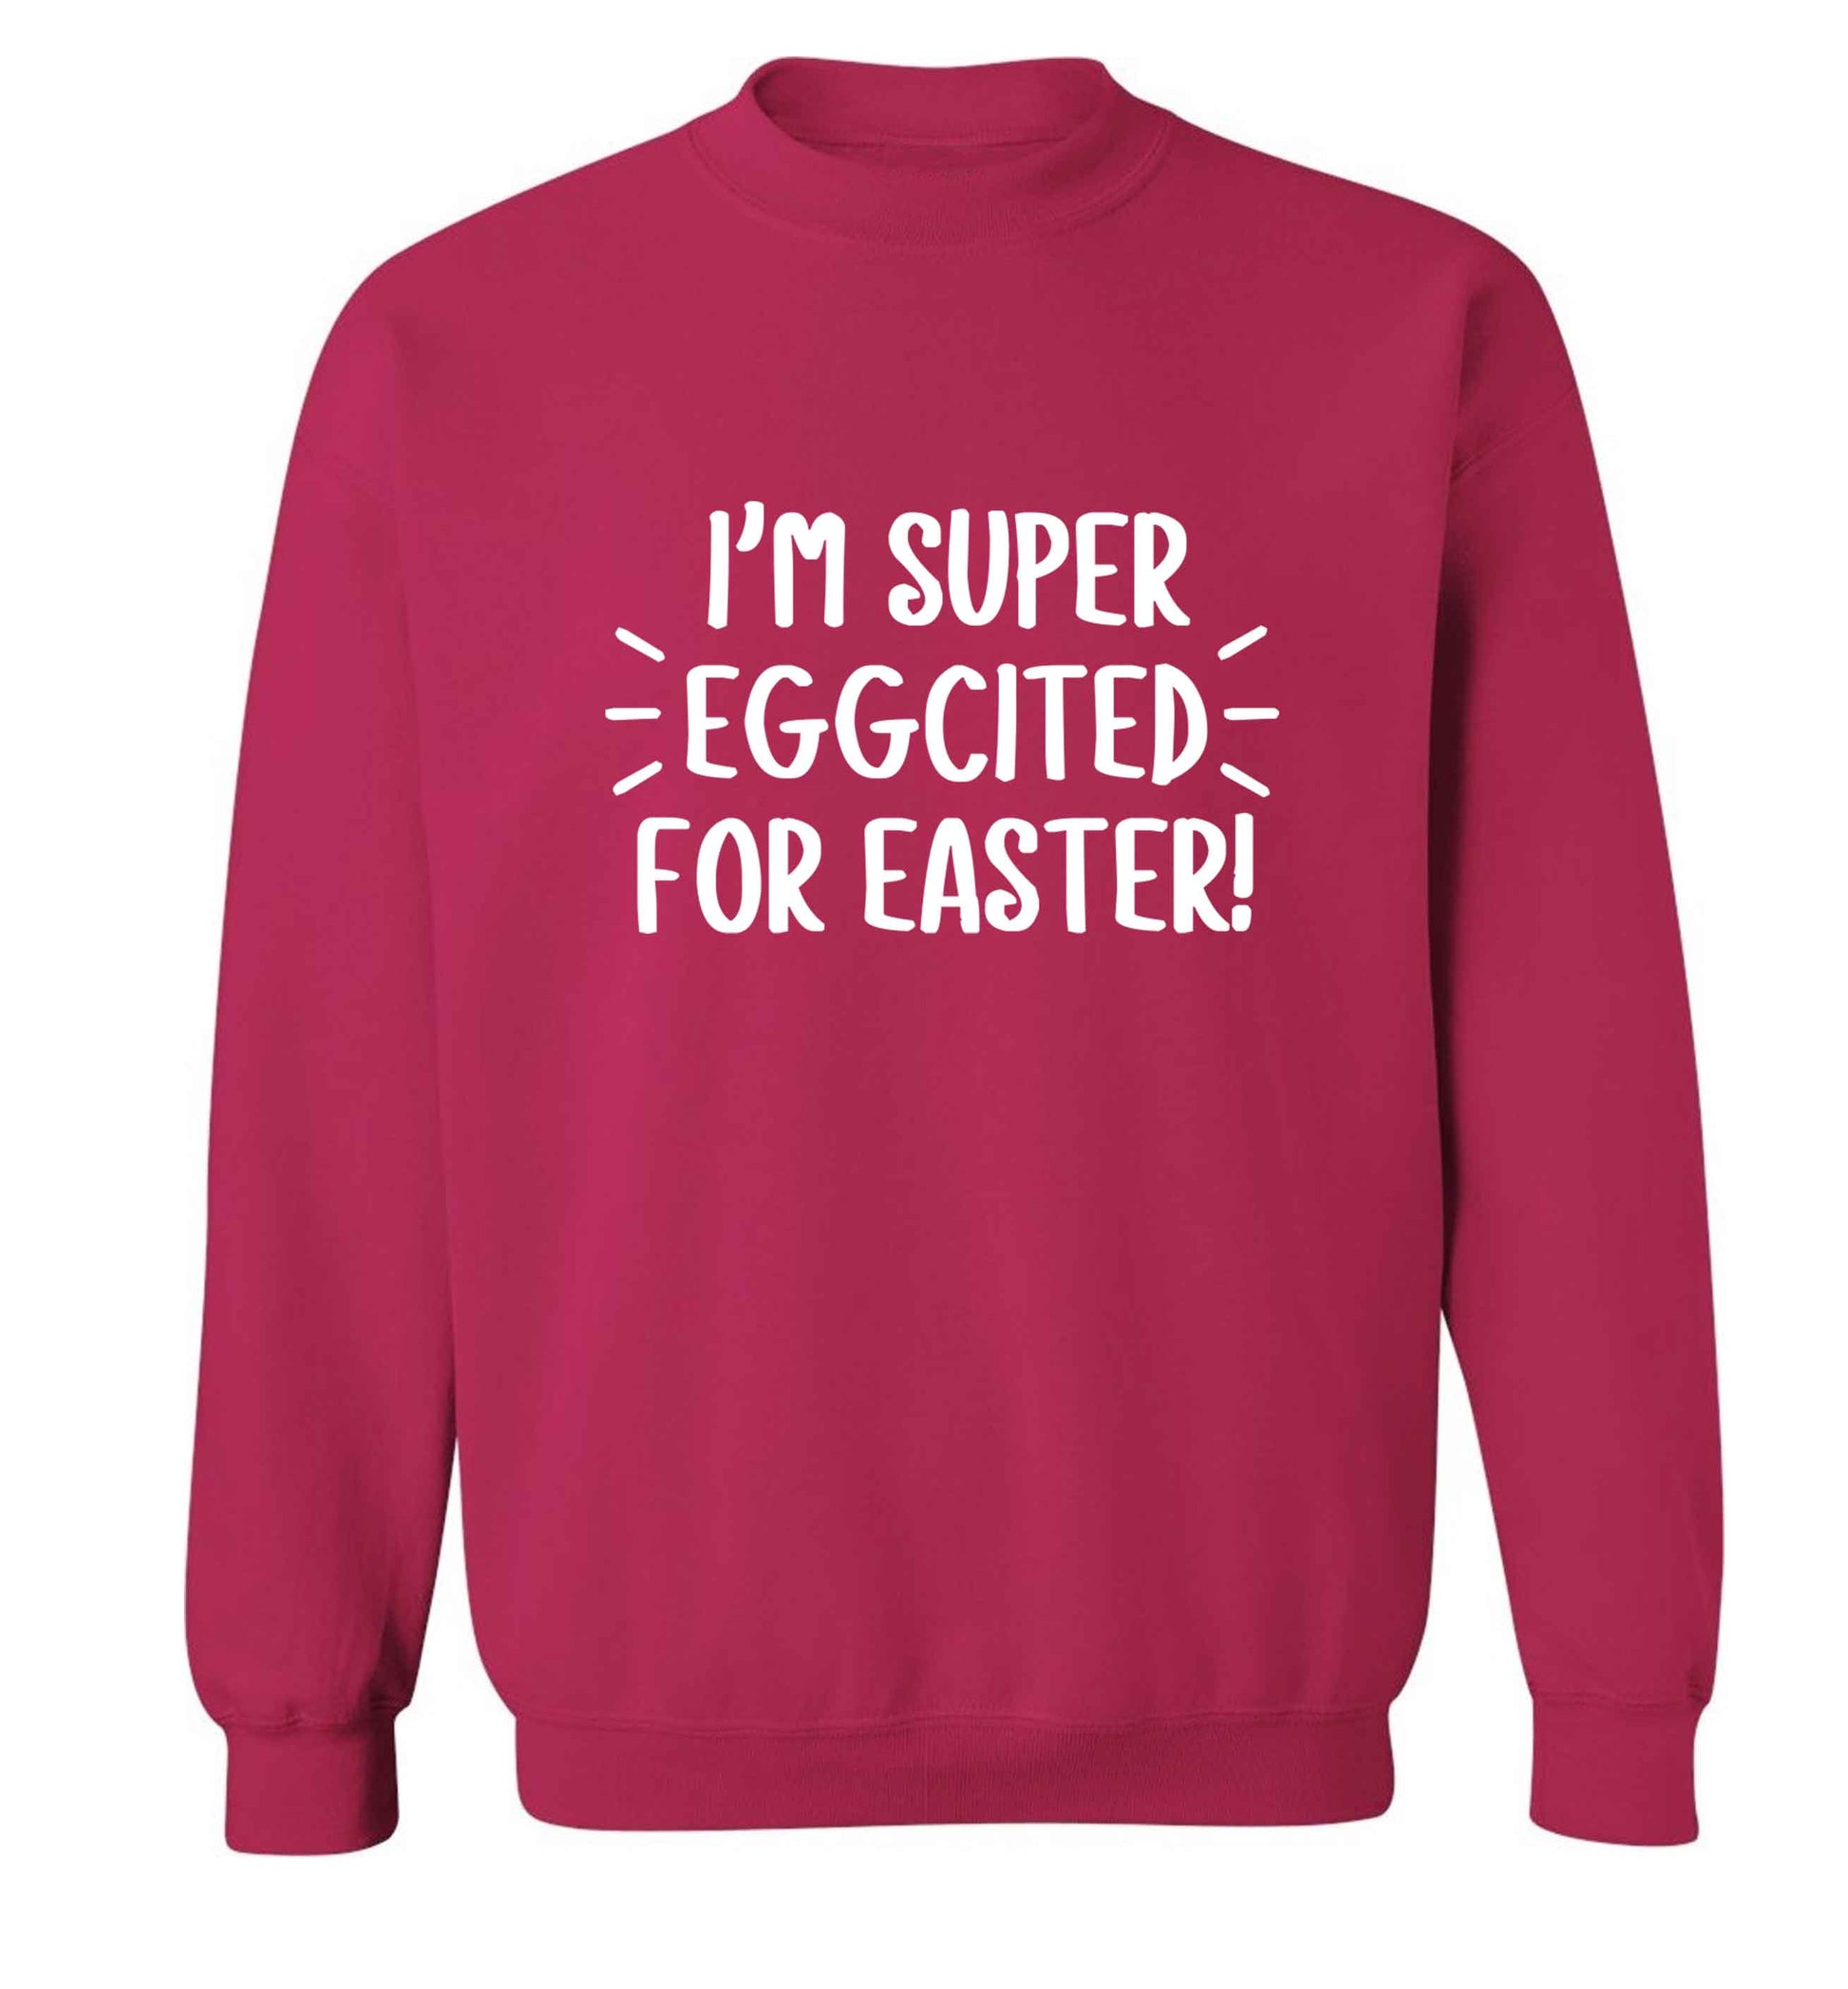 I'm super eggcited for Easter adult's unisex pink sweater 2XL